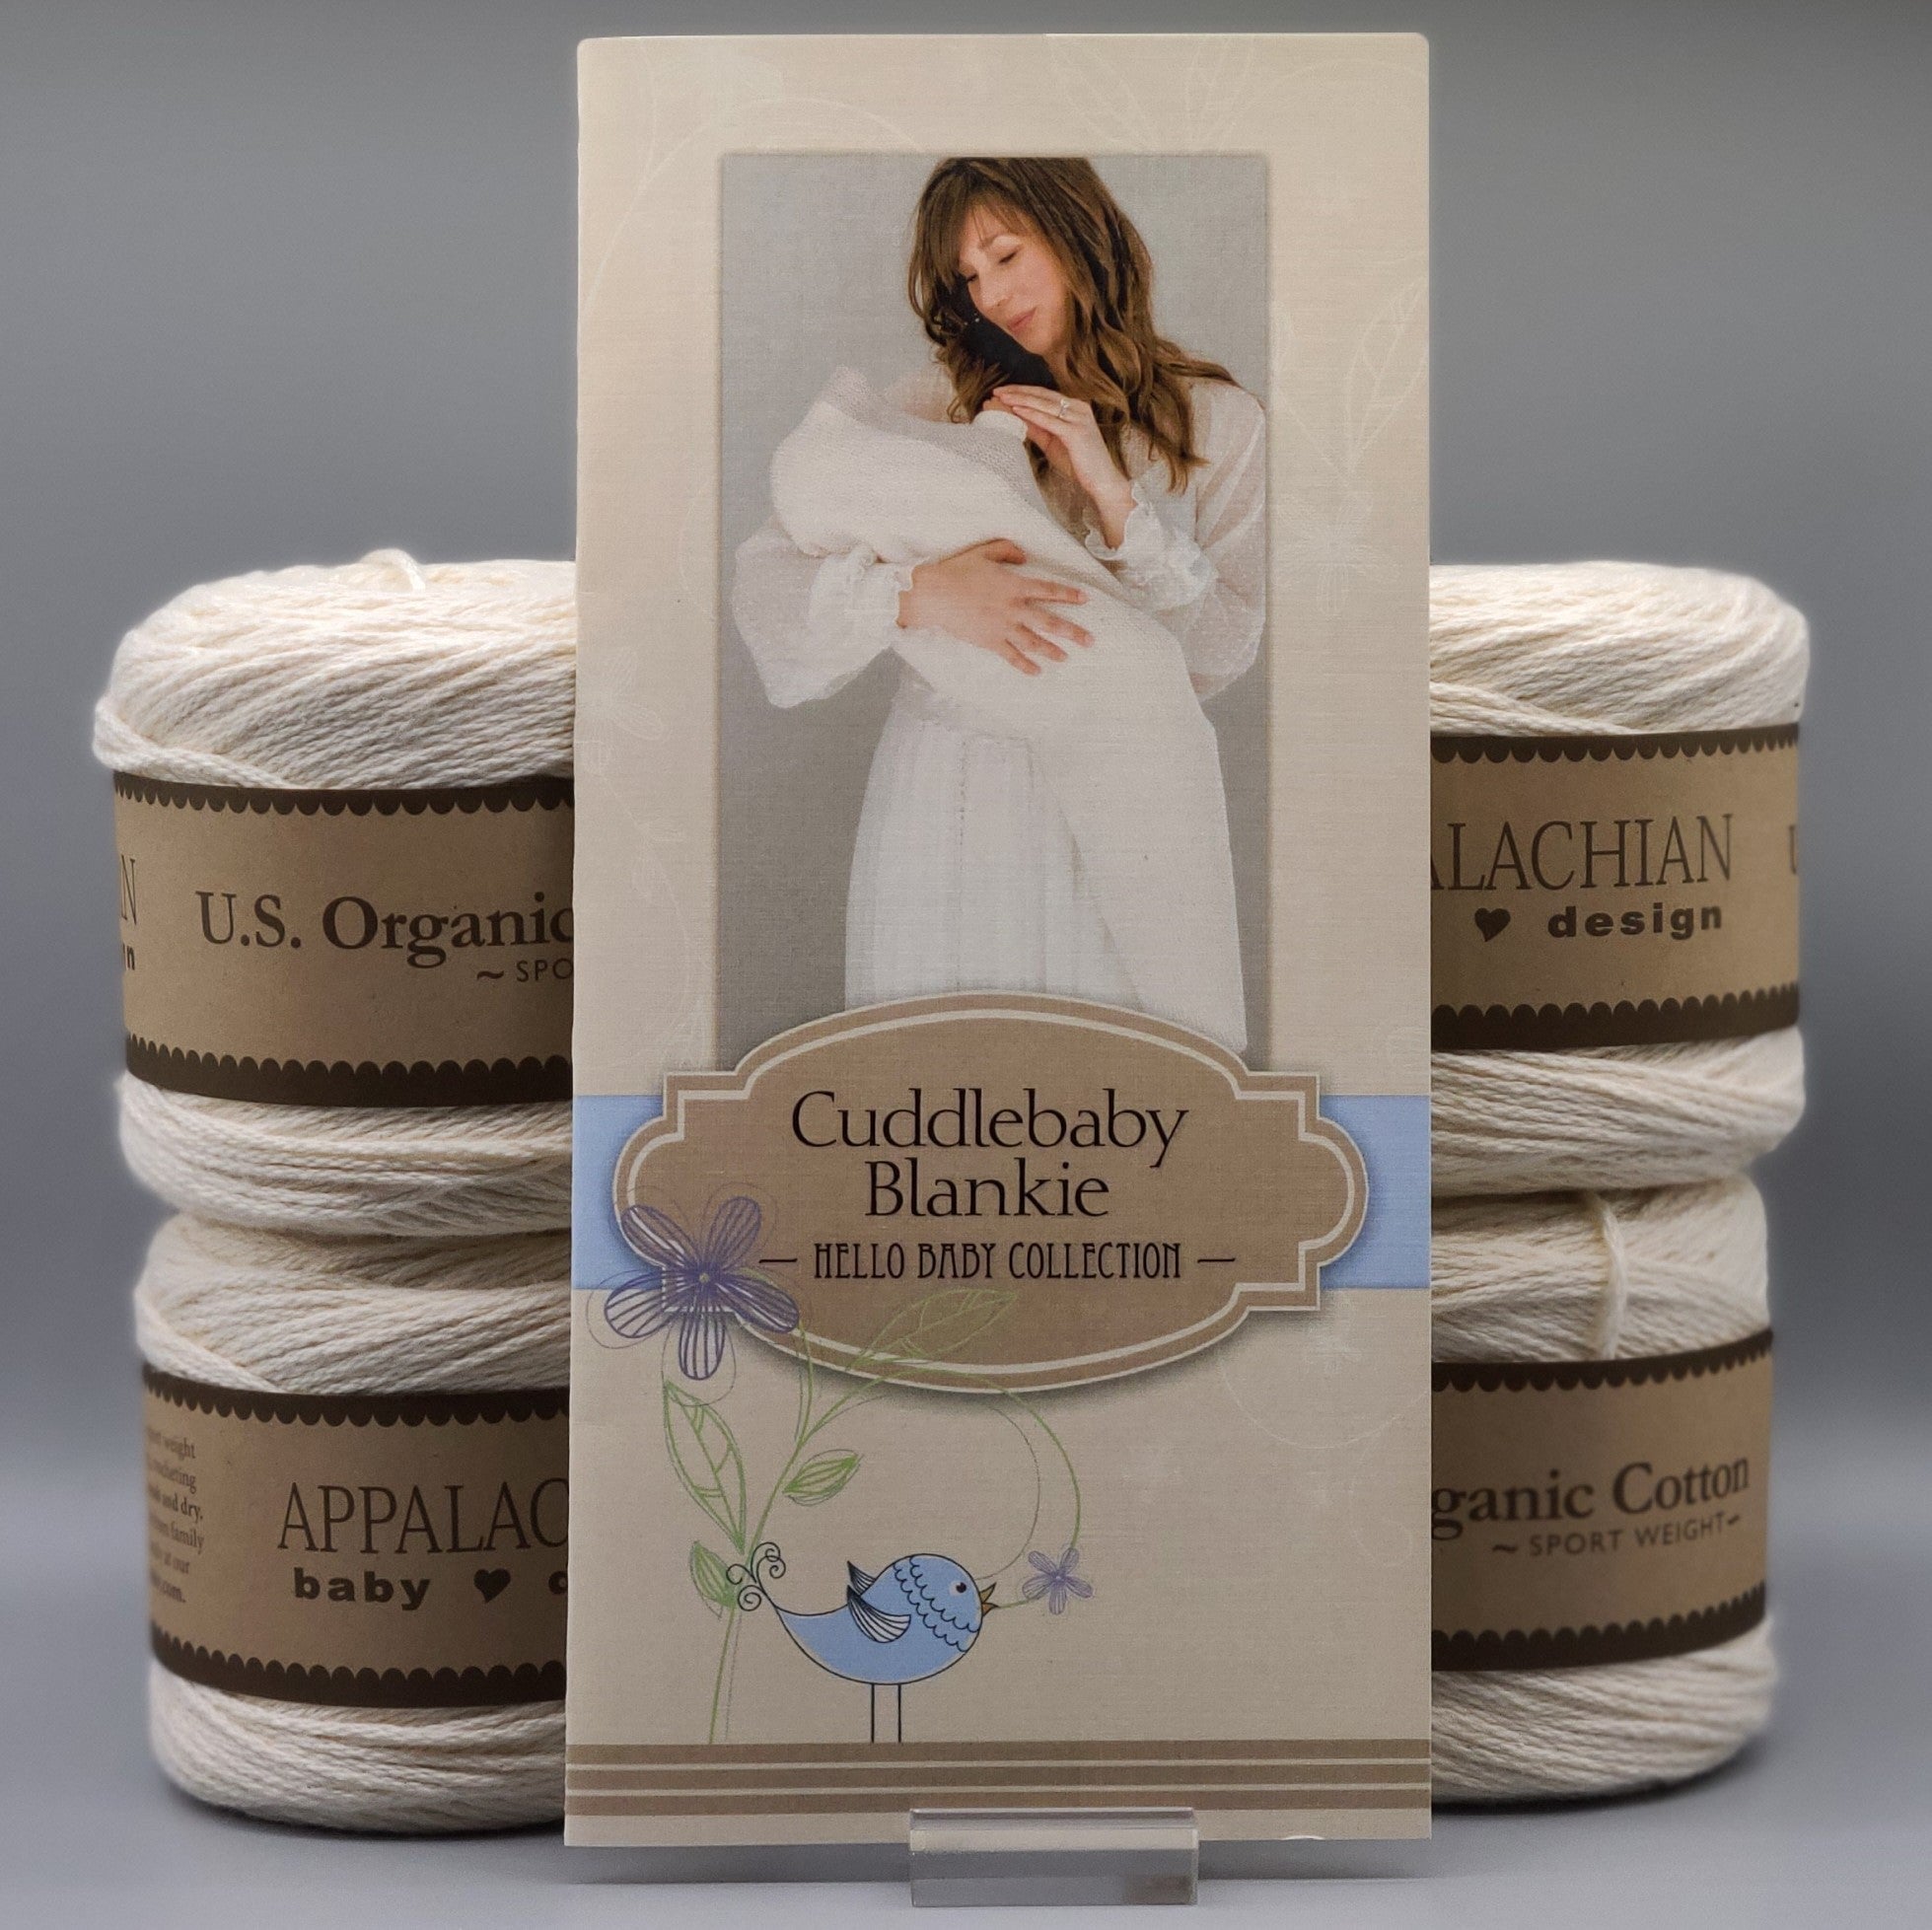 Appalachian Baby Design U.S. Organic Cotton Sport Weight-3 oz/194 yd/177m